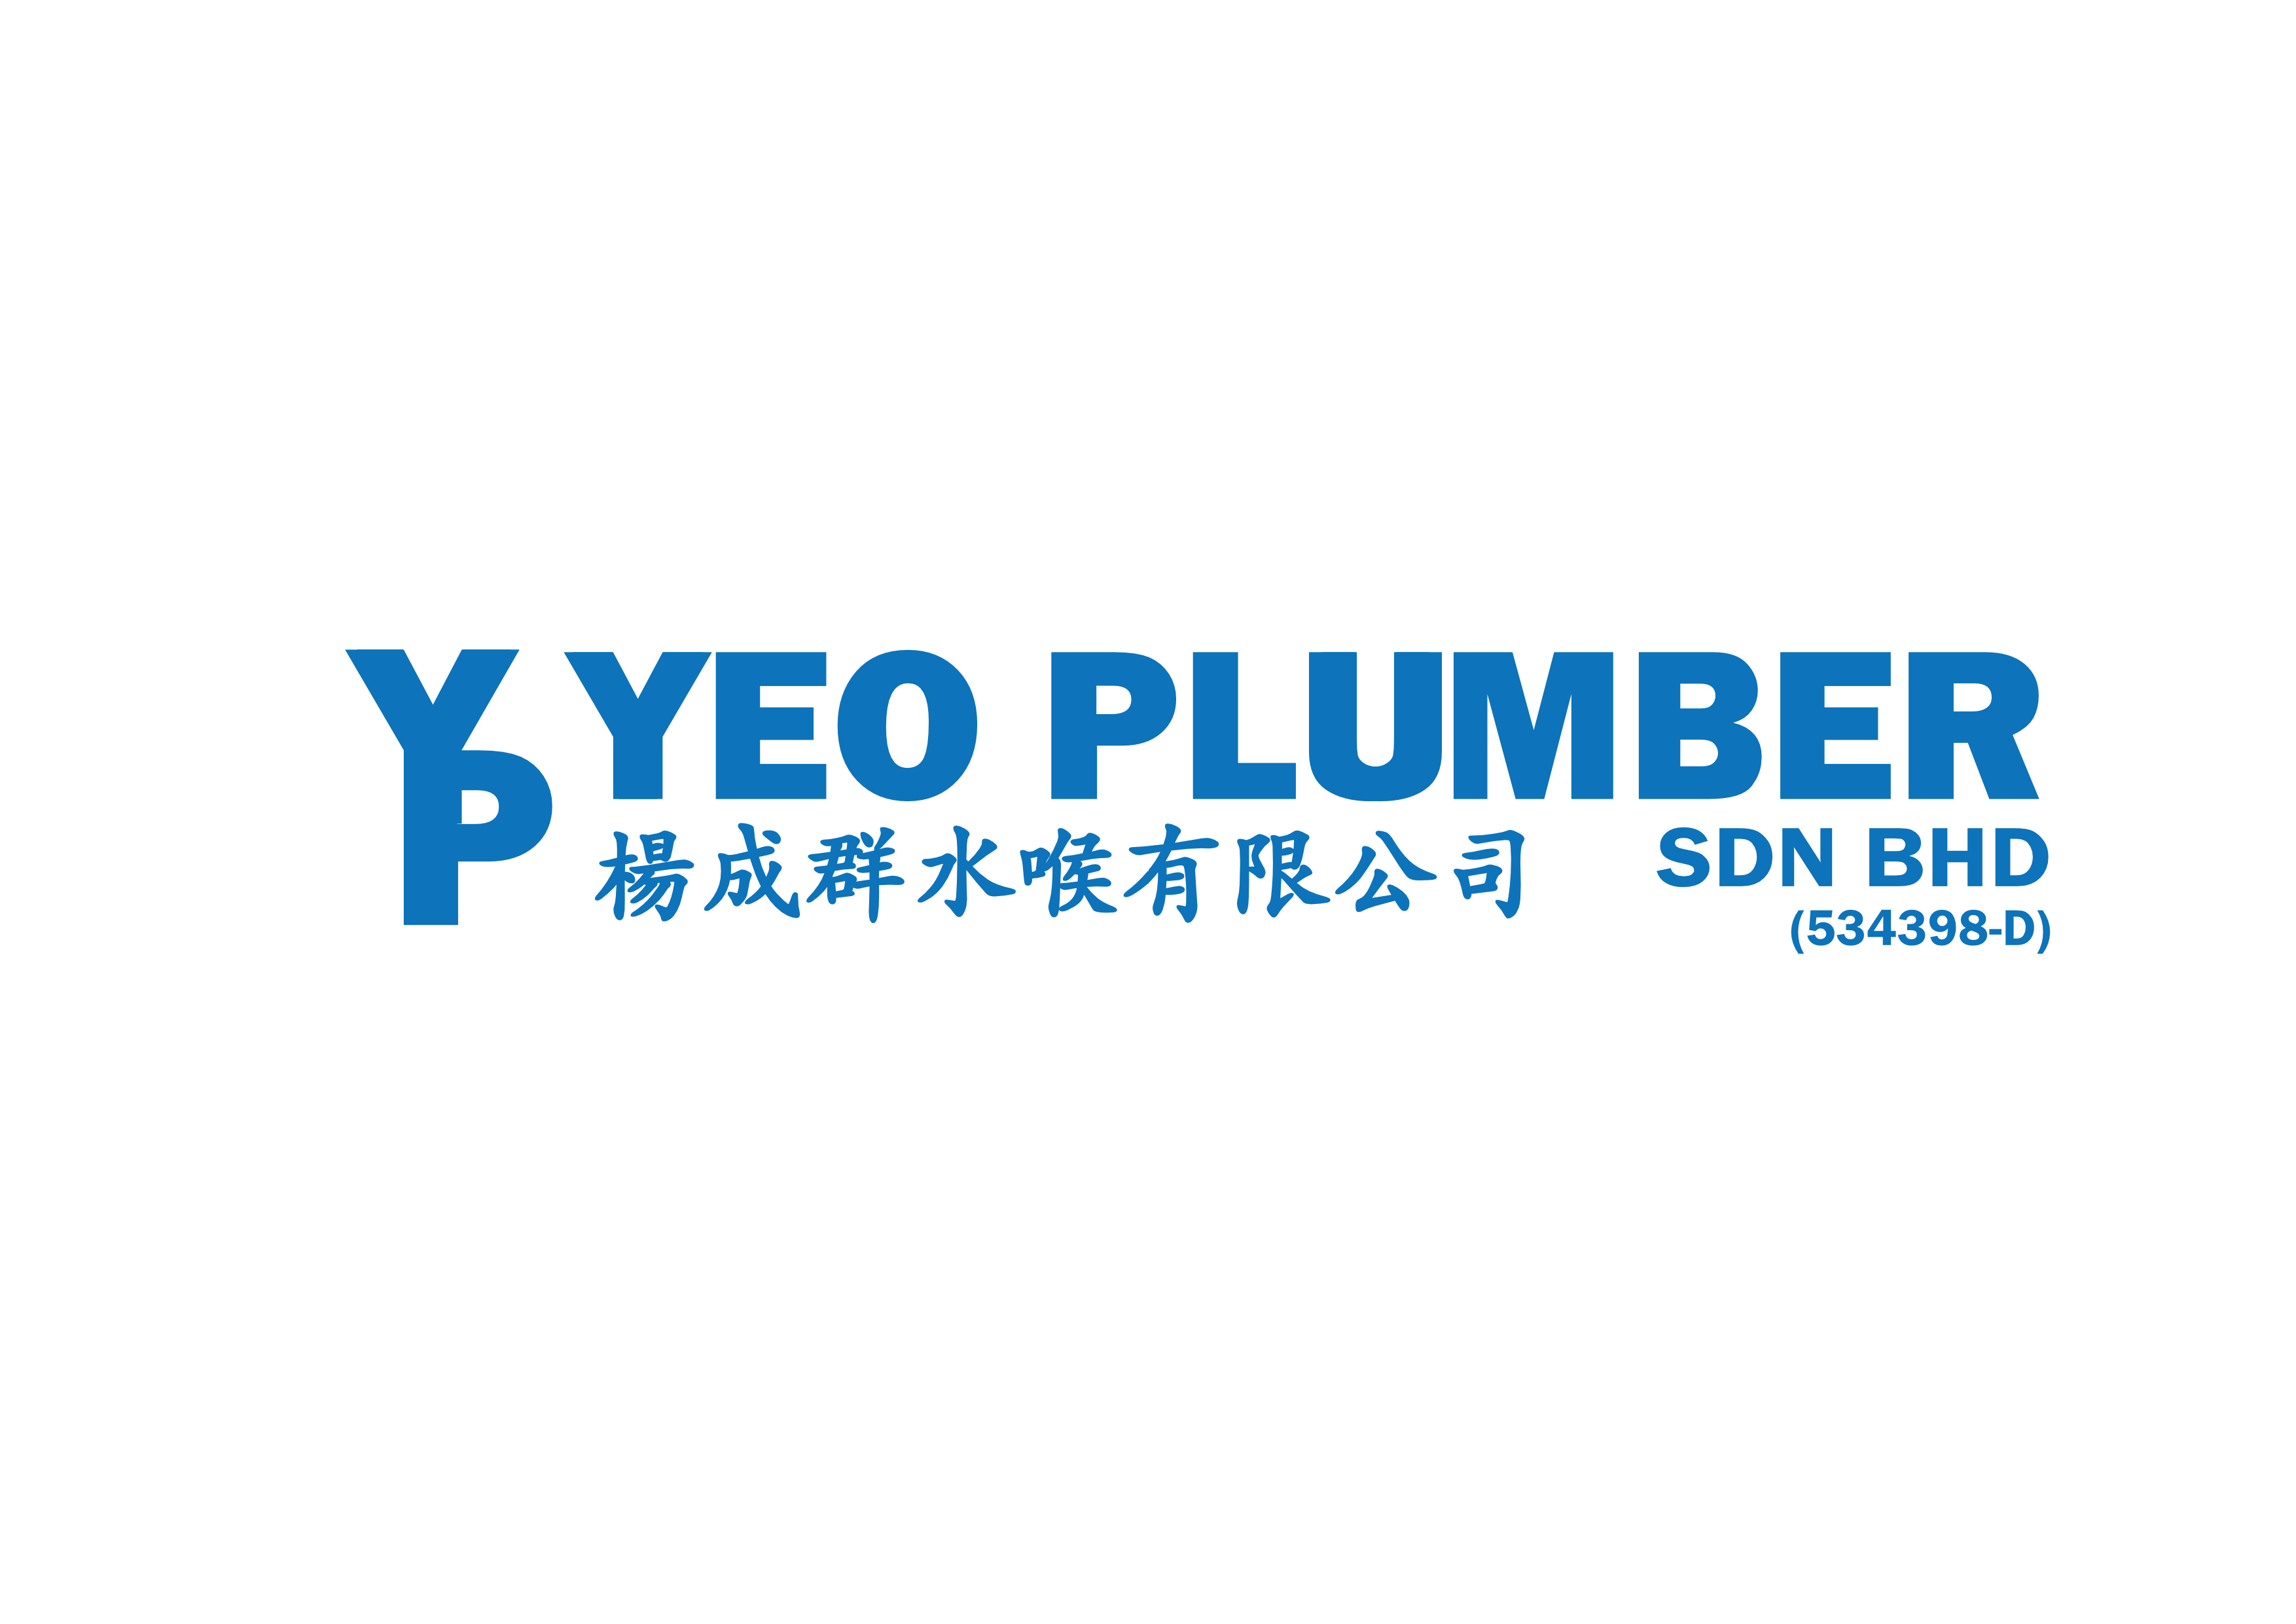 Yeo Plumber Sdn Bhd